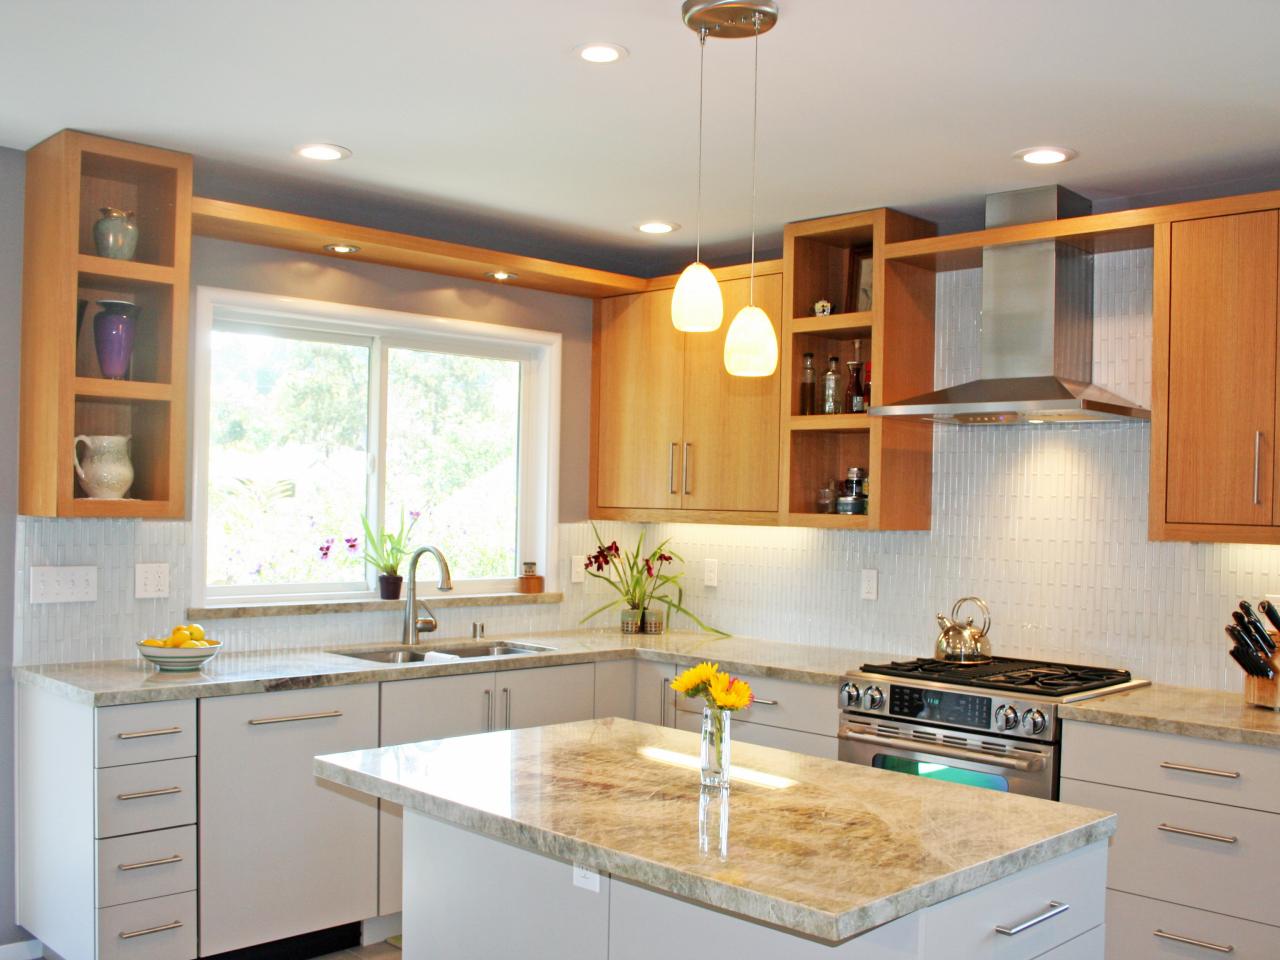 Smart open kitchen cabinet